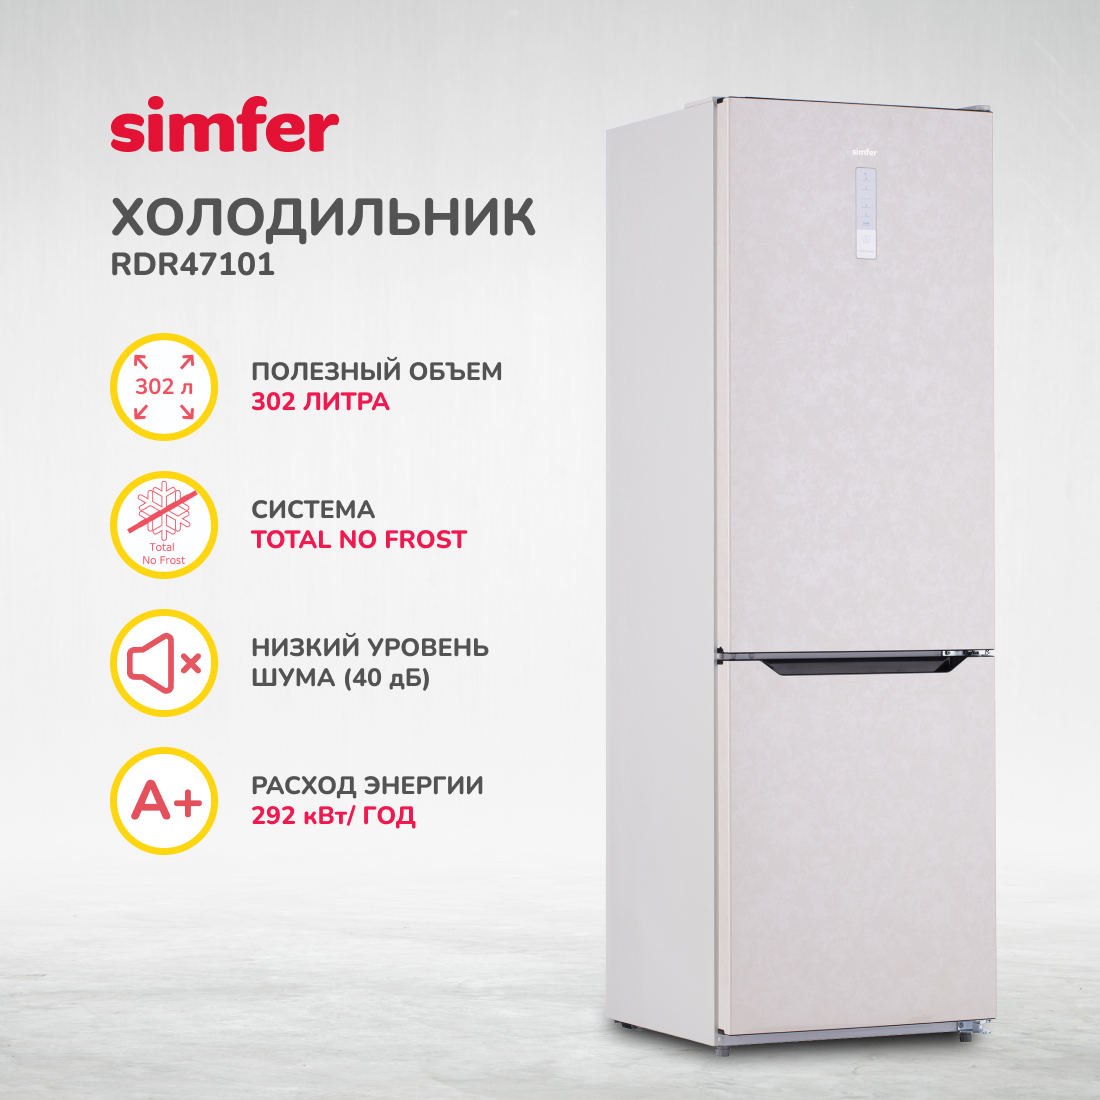 Холодильник Simfer RDR47101, No Frost, двухкамерный, 302 л стул frost pp 8110 серый